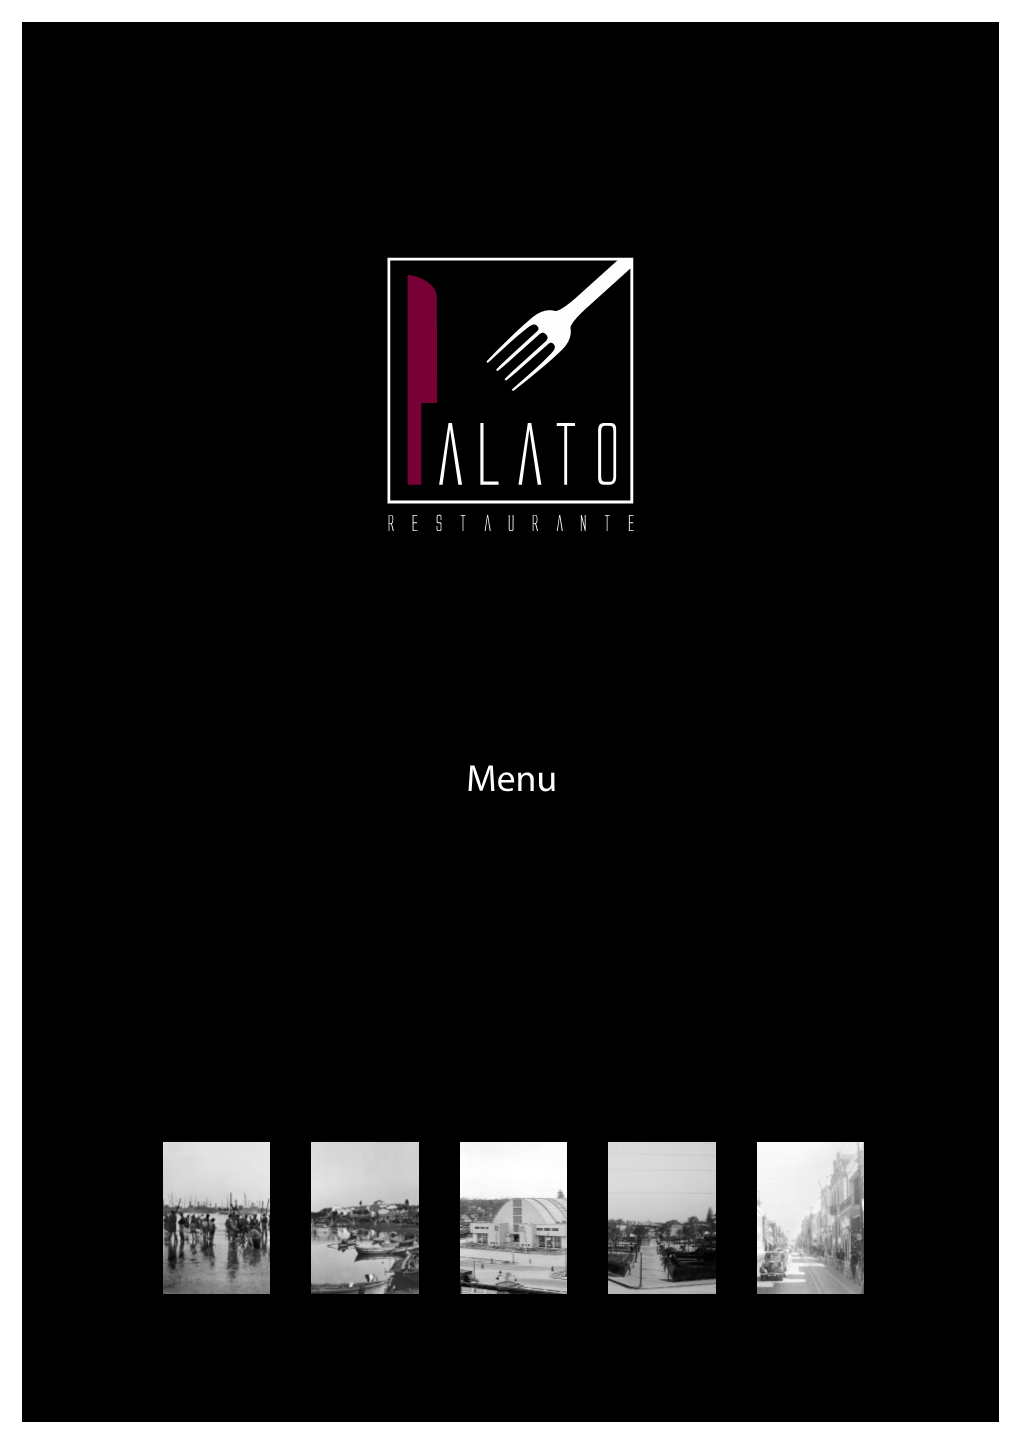 Palato Restaurante